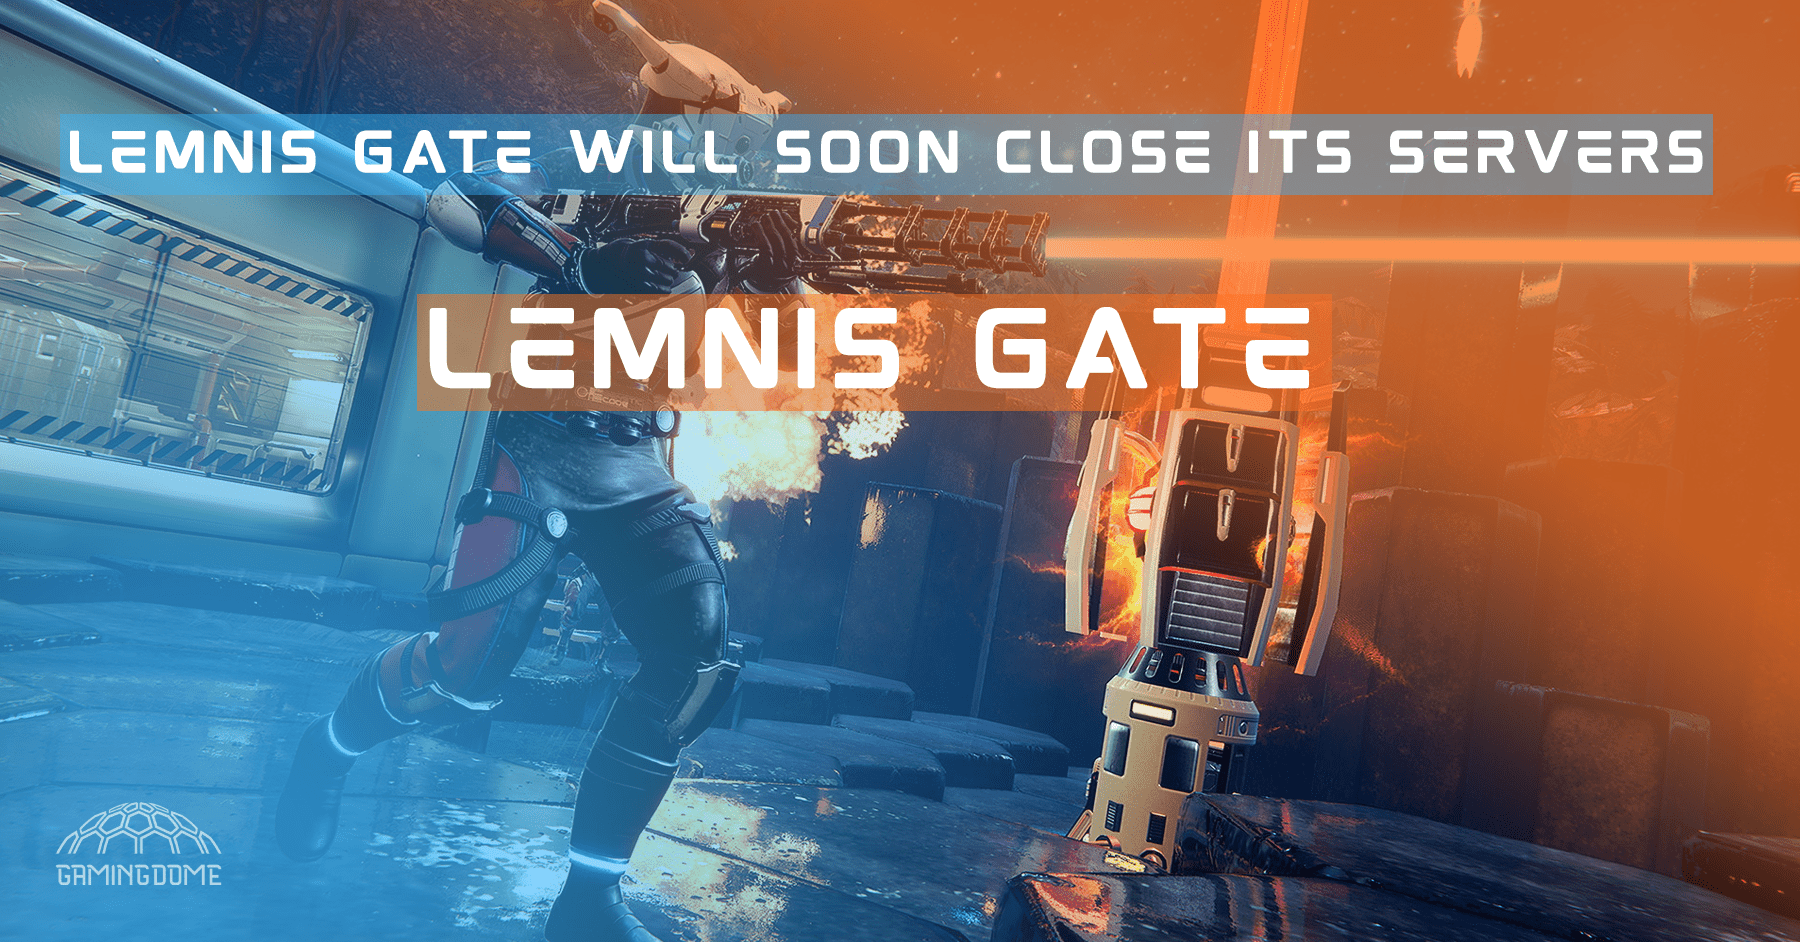 Lemnis Gate will soon close its servers